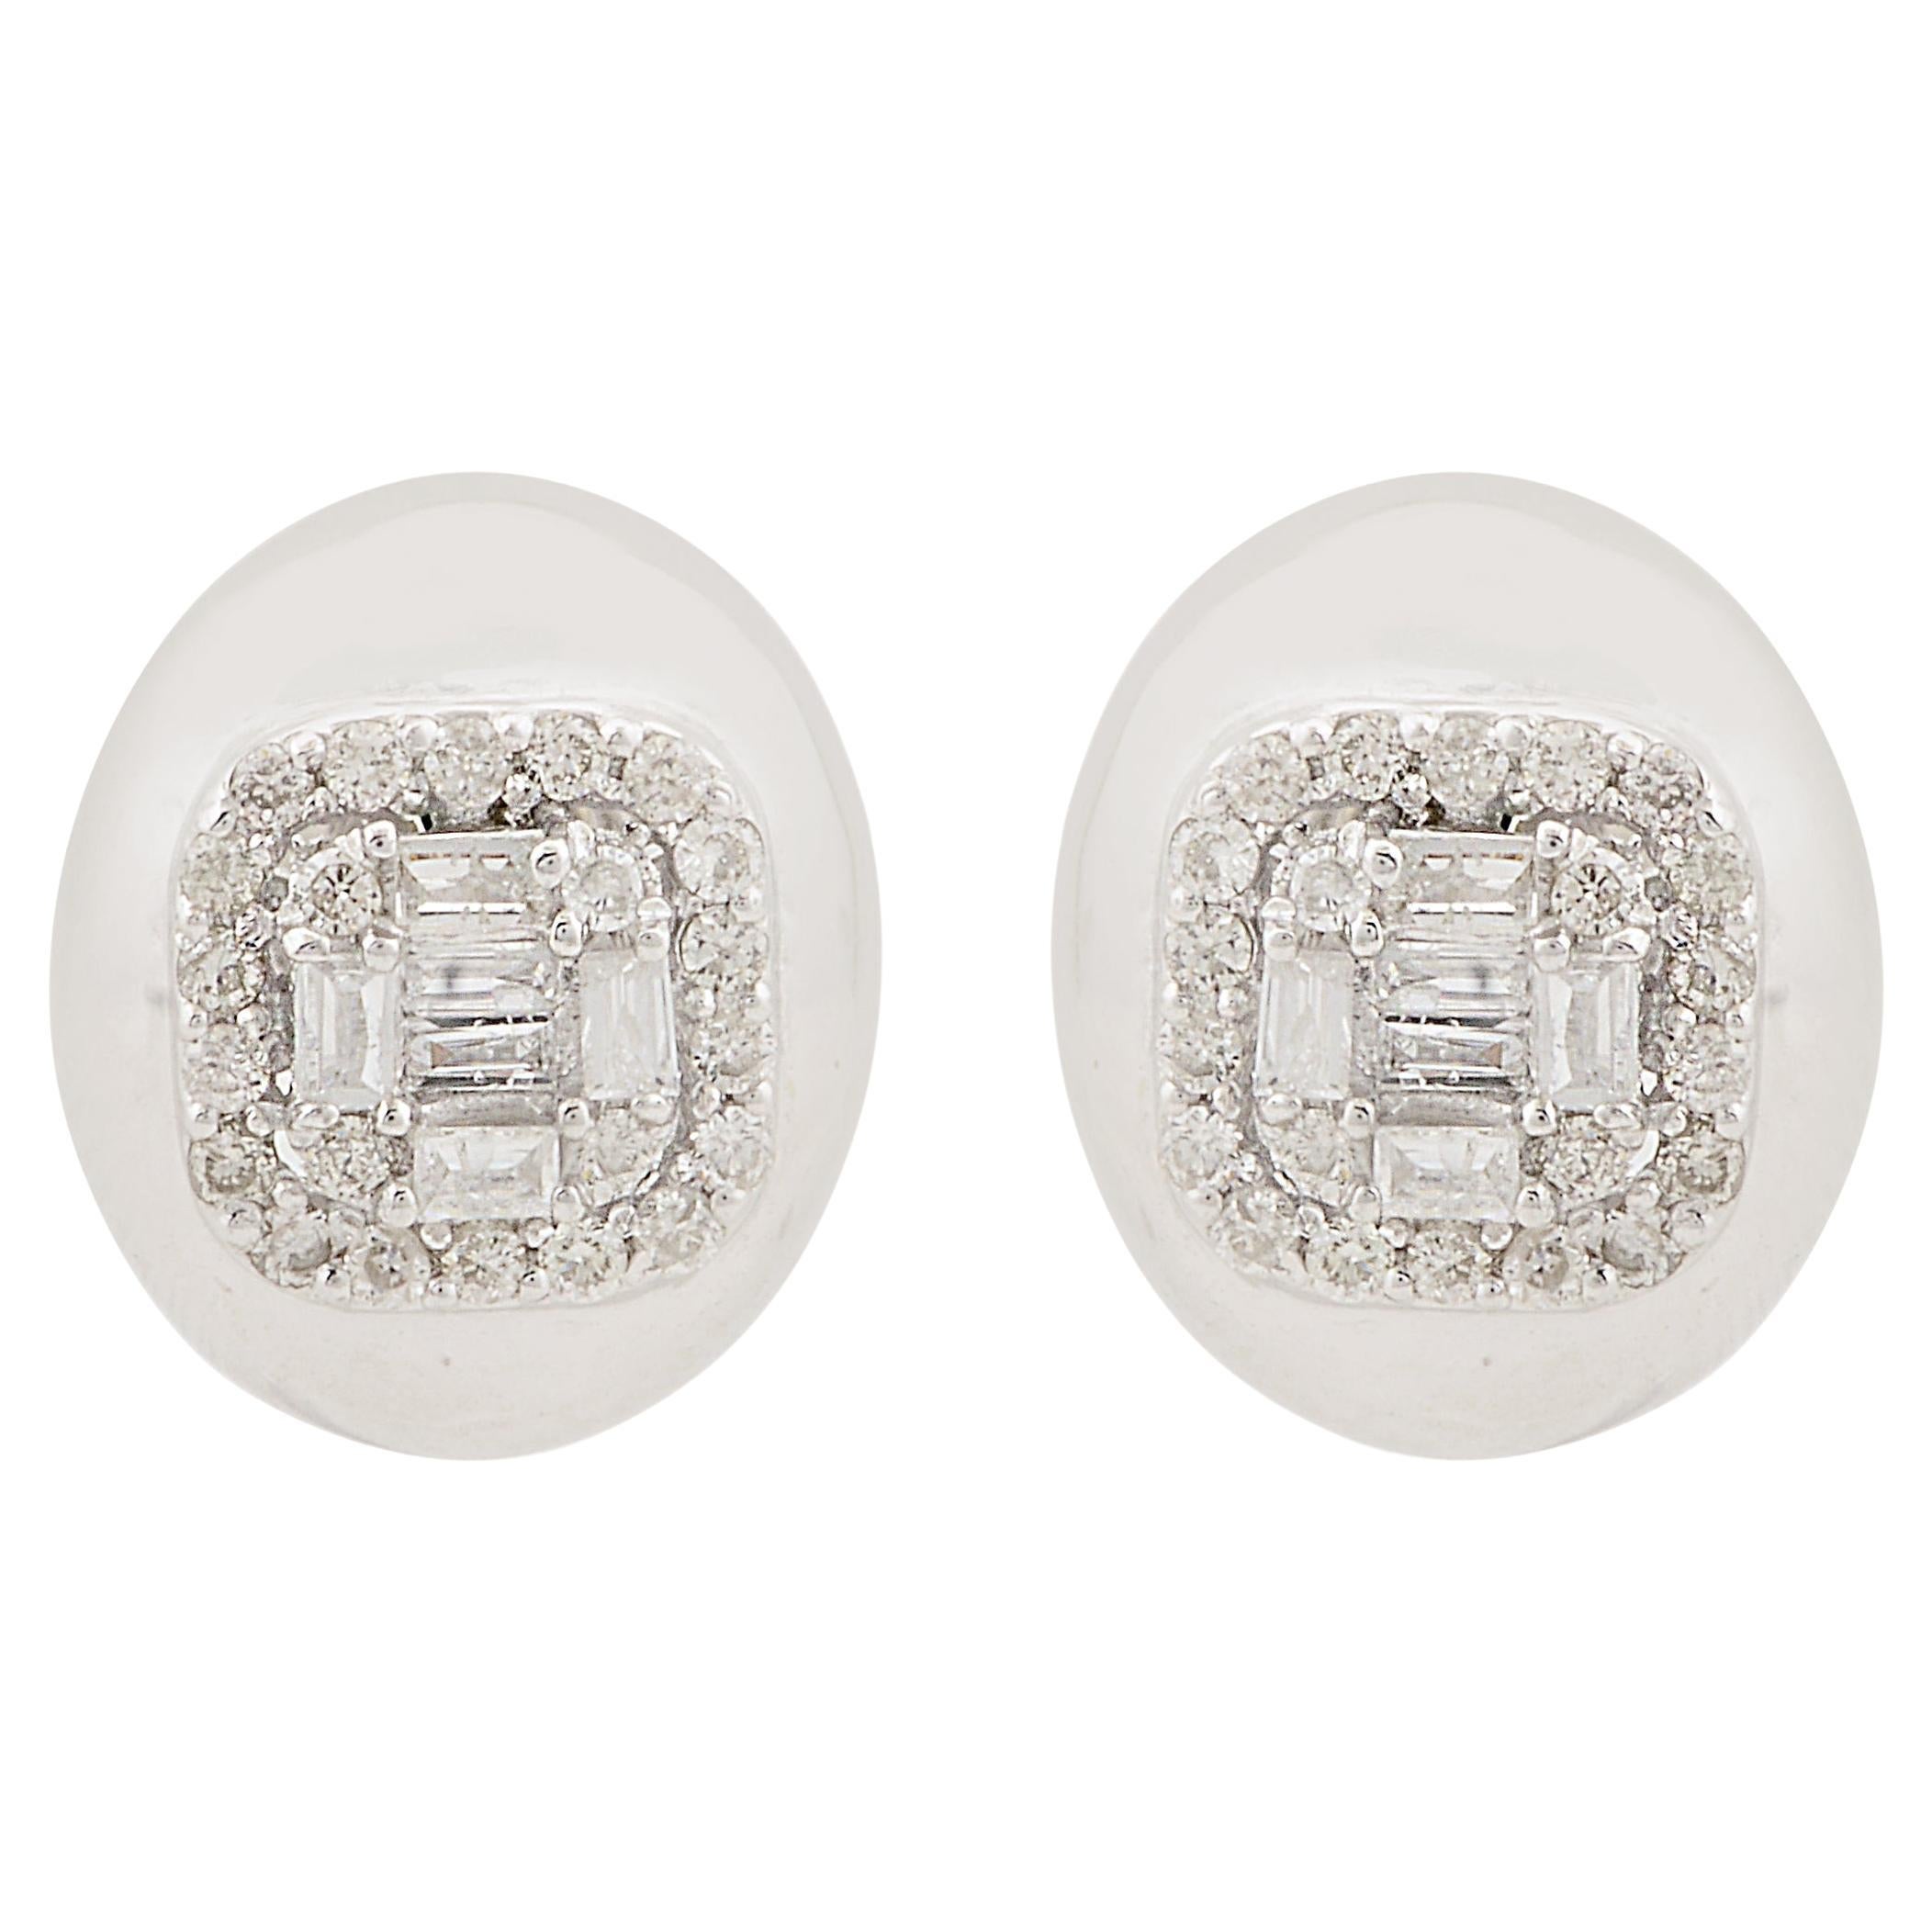 Real SI Clarity HI Color Baguette Diamond Oval Stud Earrings 10 Karat White Gold